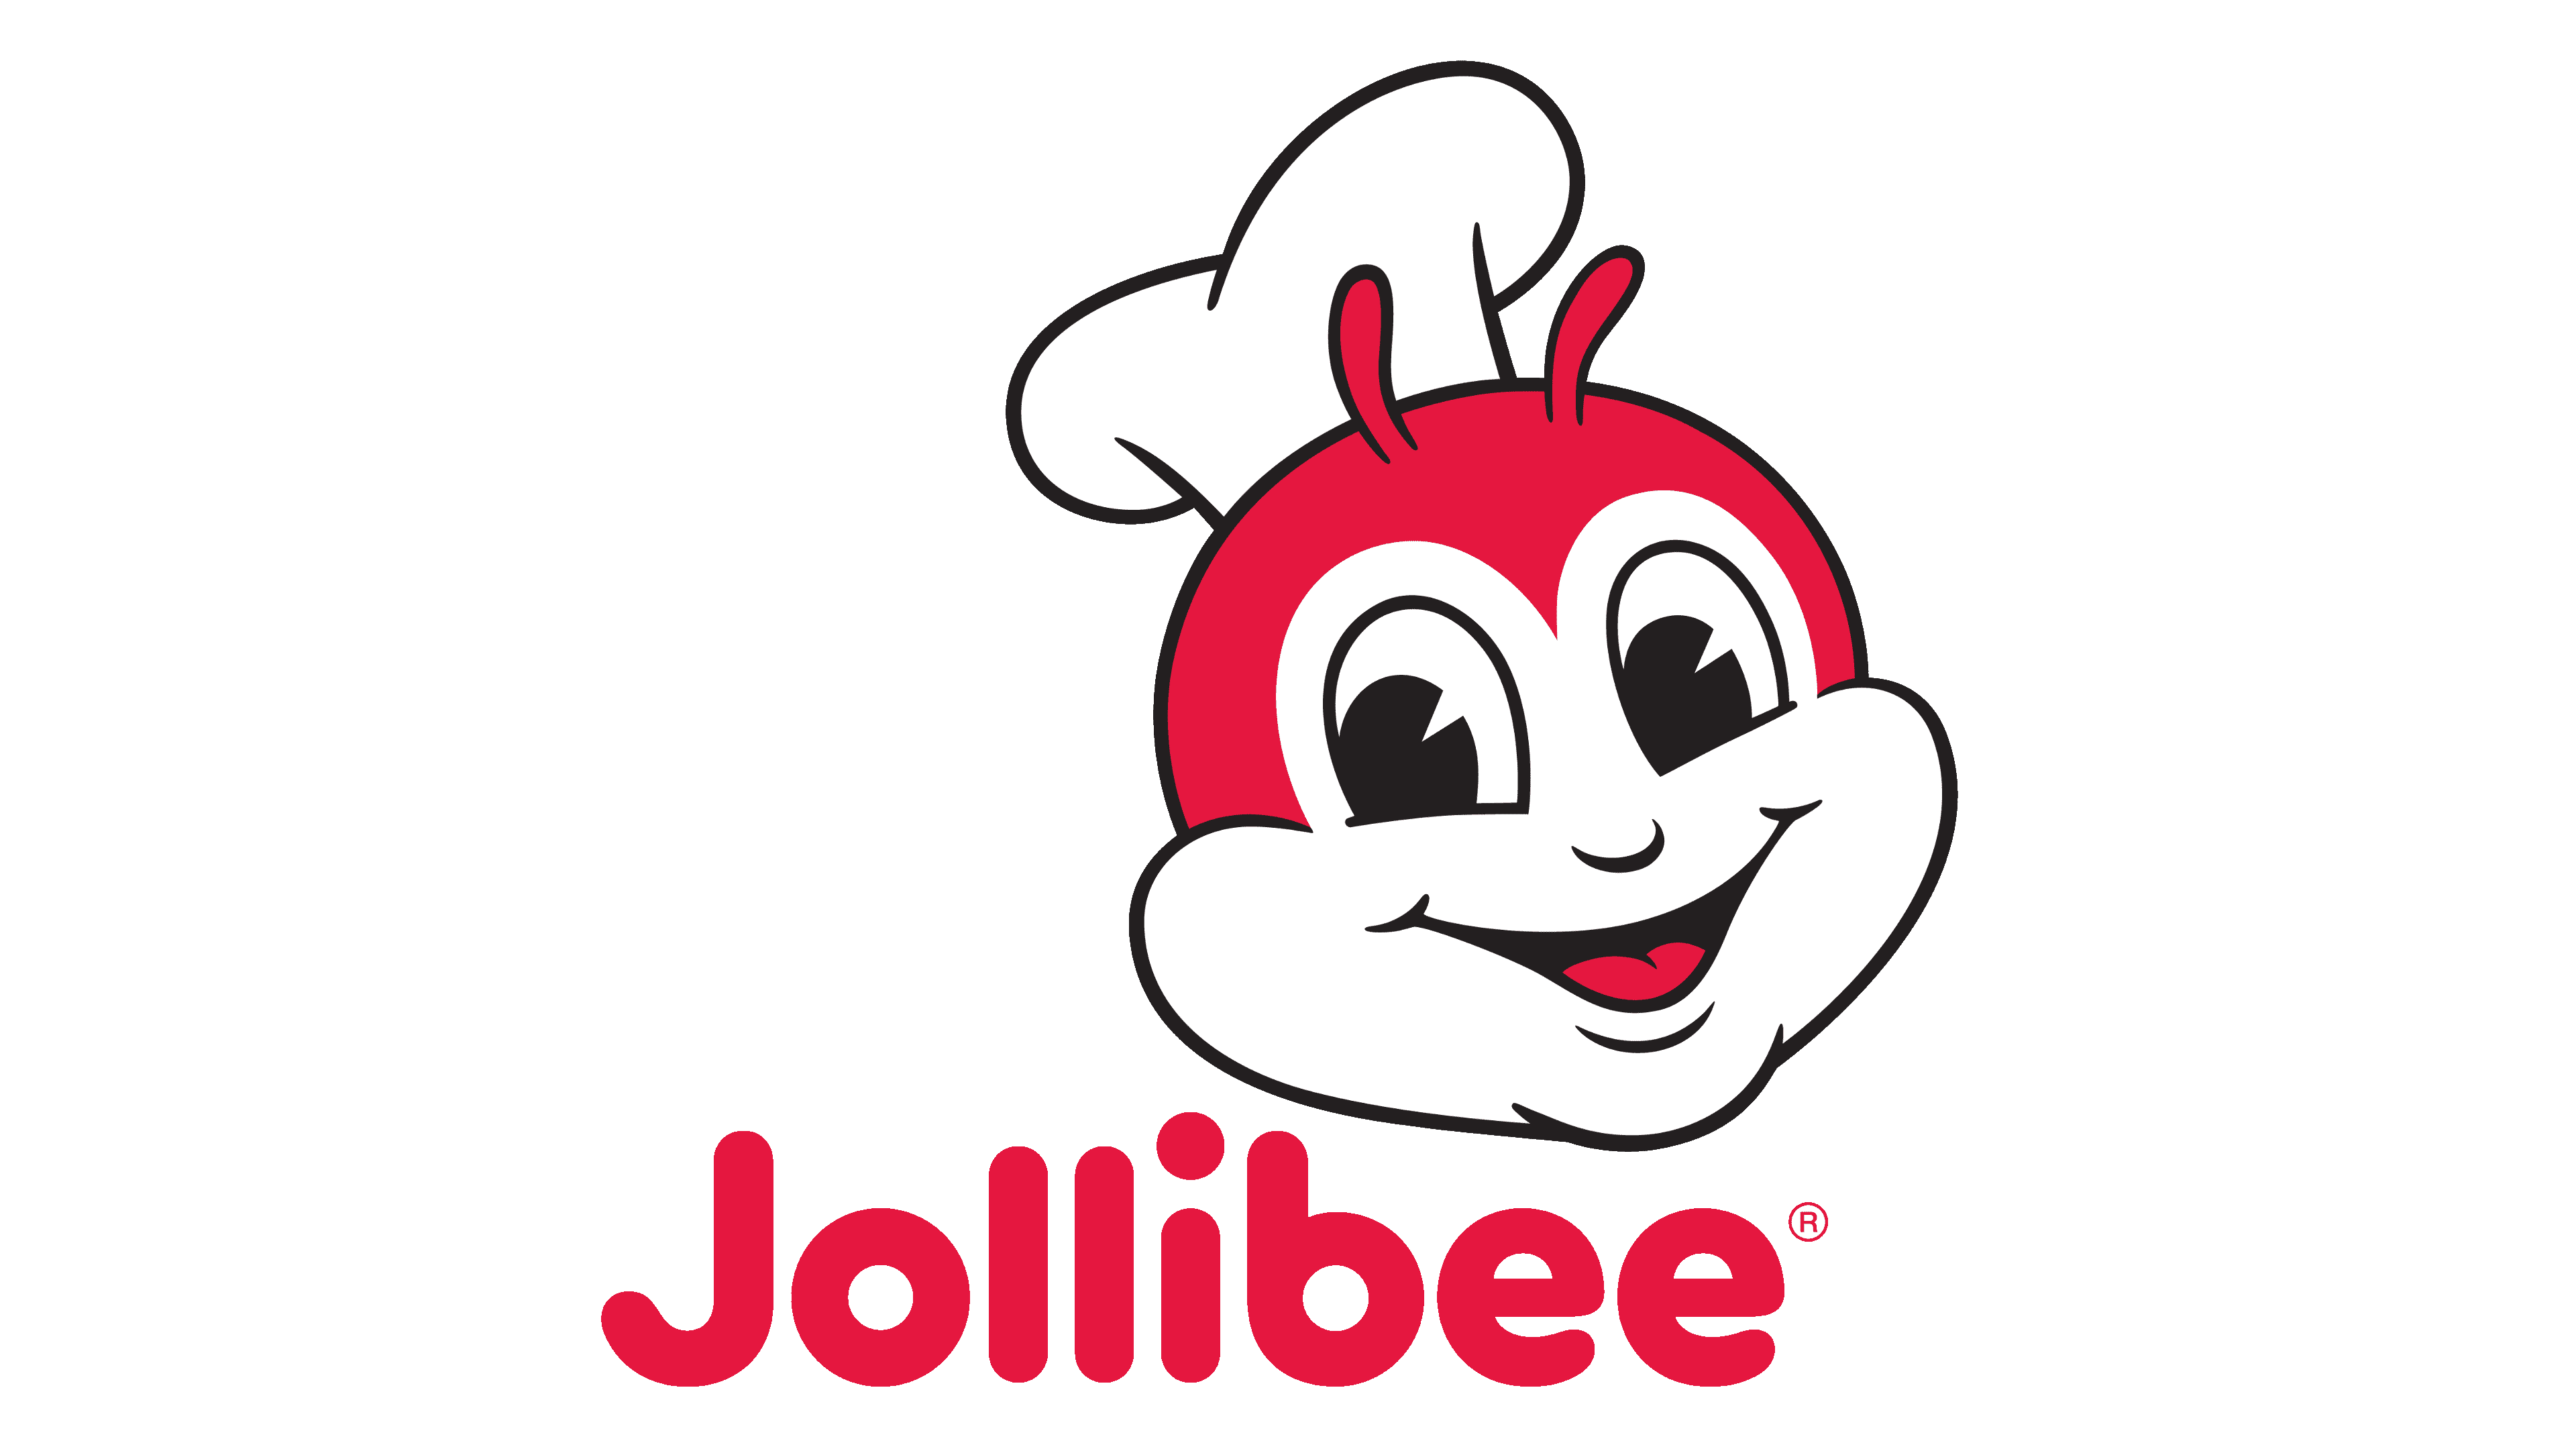 Jollibee Logo Meaning